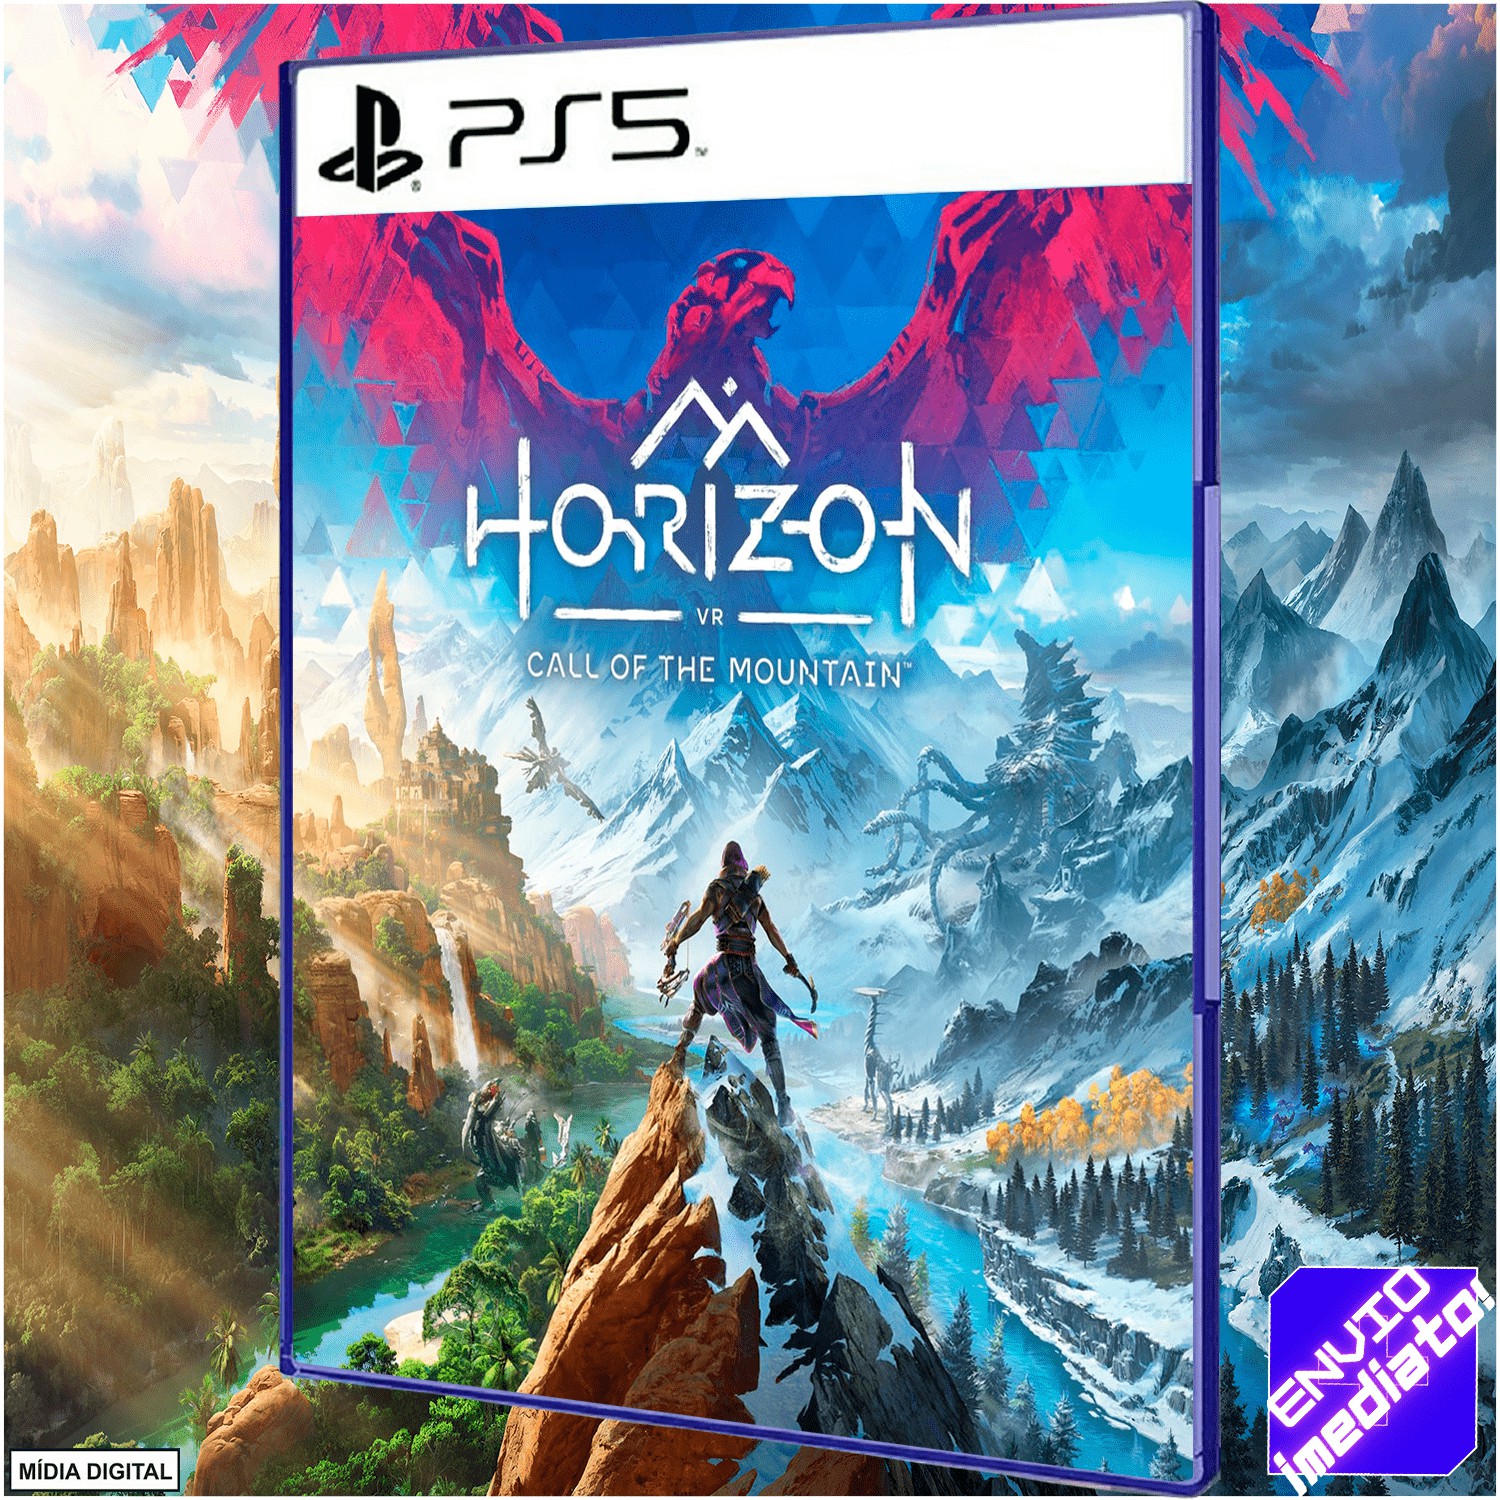 Playstation Vr2 Novo Jogo Horizon Call Of The Mountain Ps5